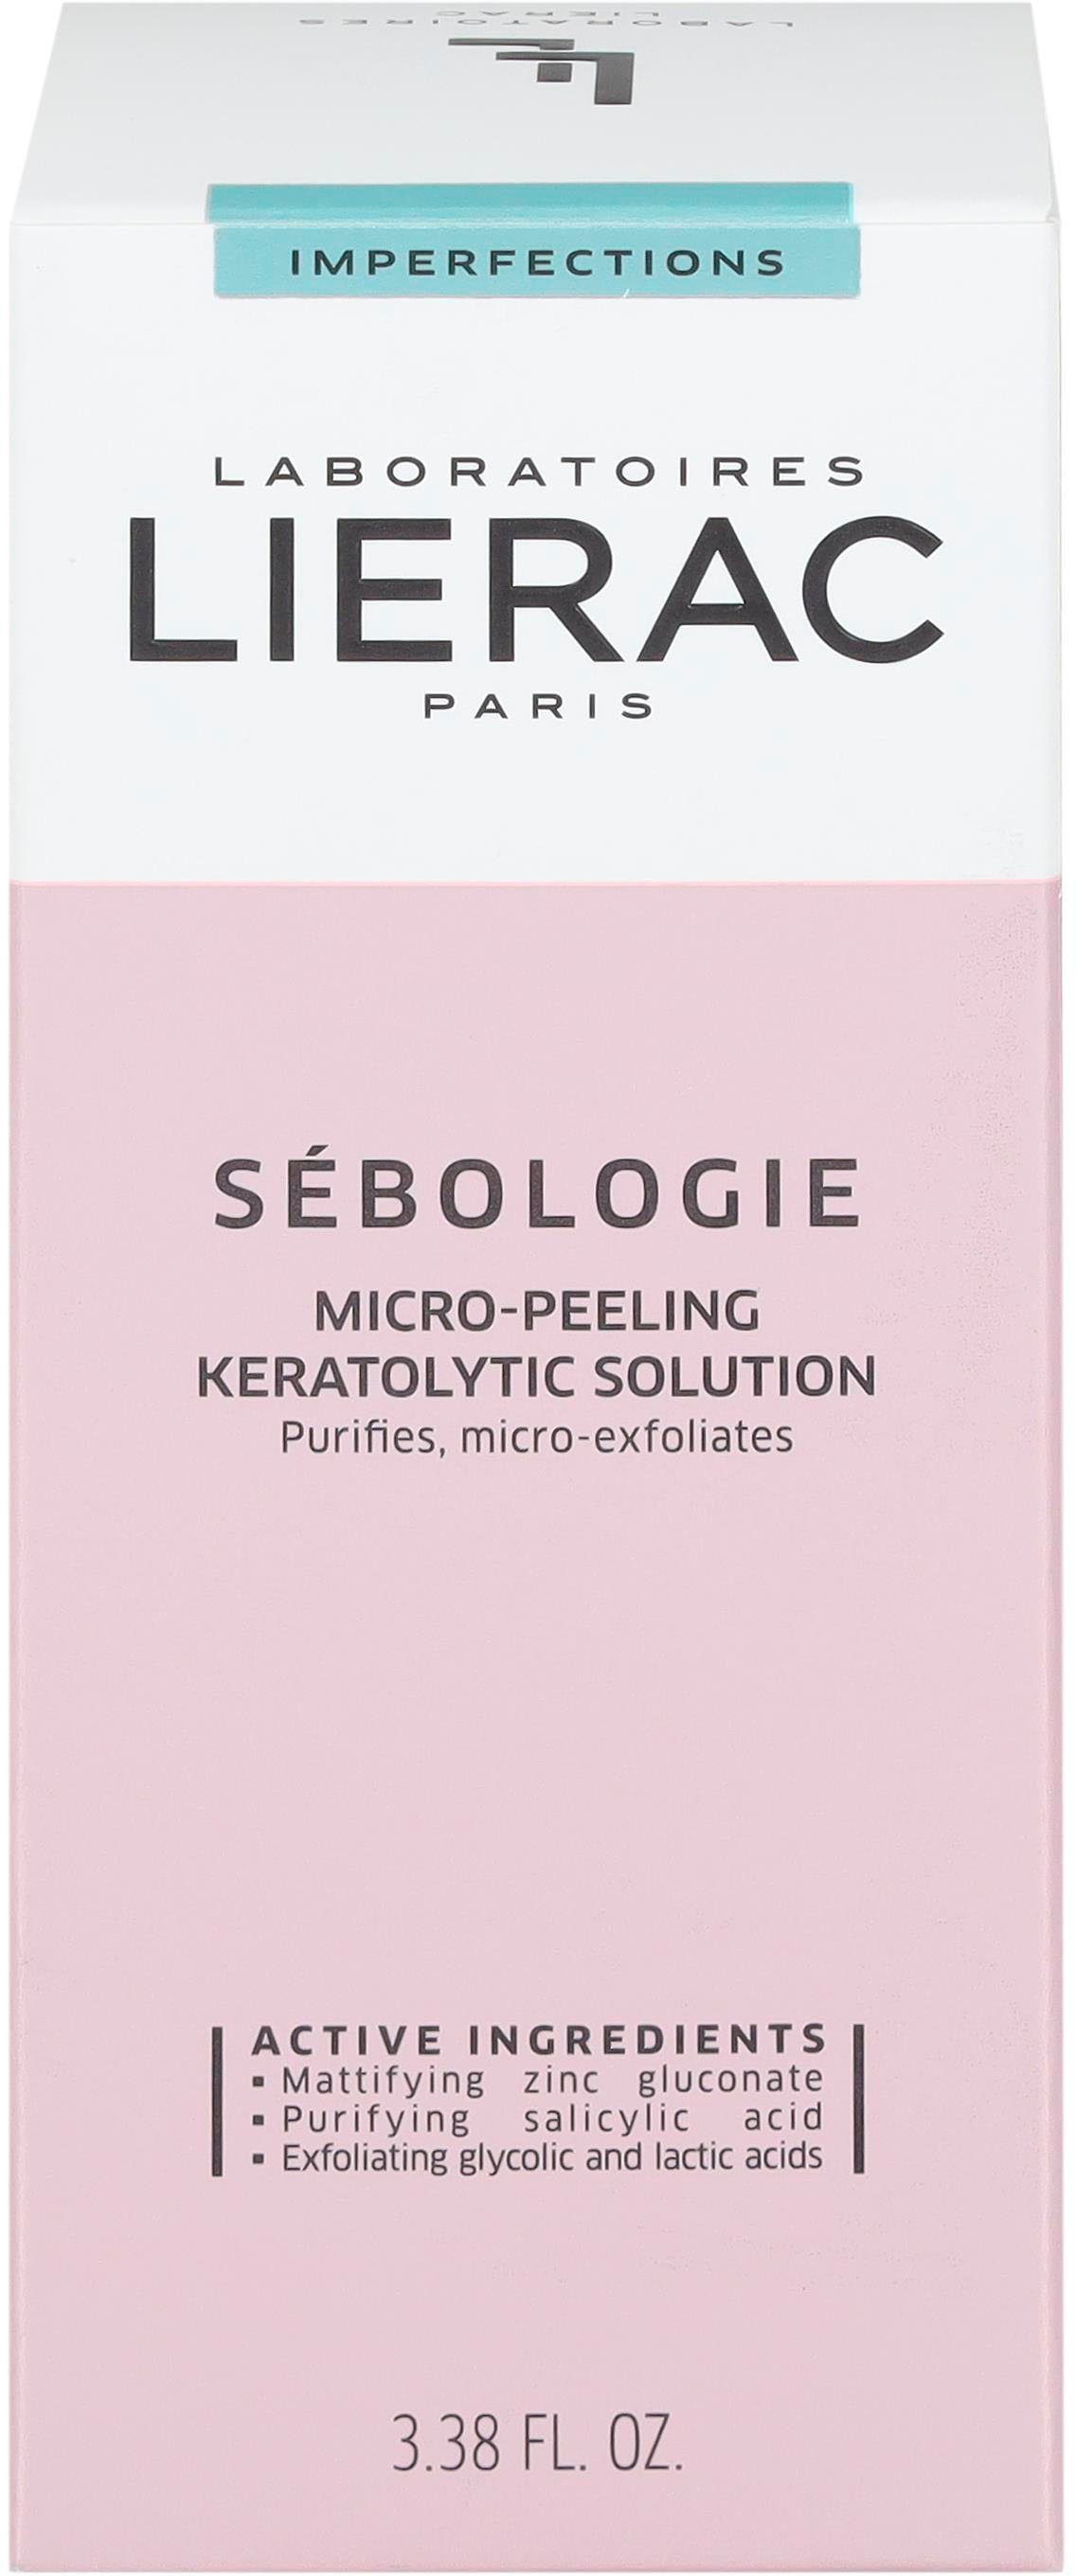 Micro-Peeling Sebologie Keratolytique Gesichts-Reinigungsfluid Solution LIERAC